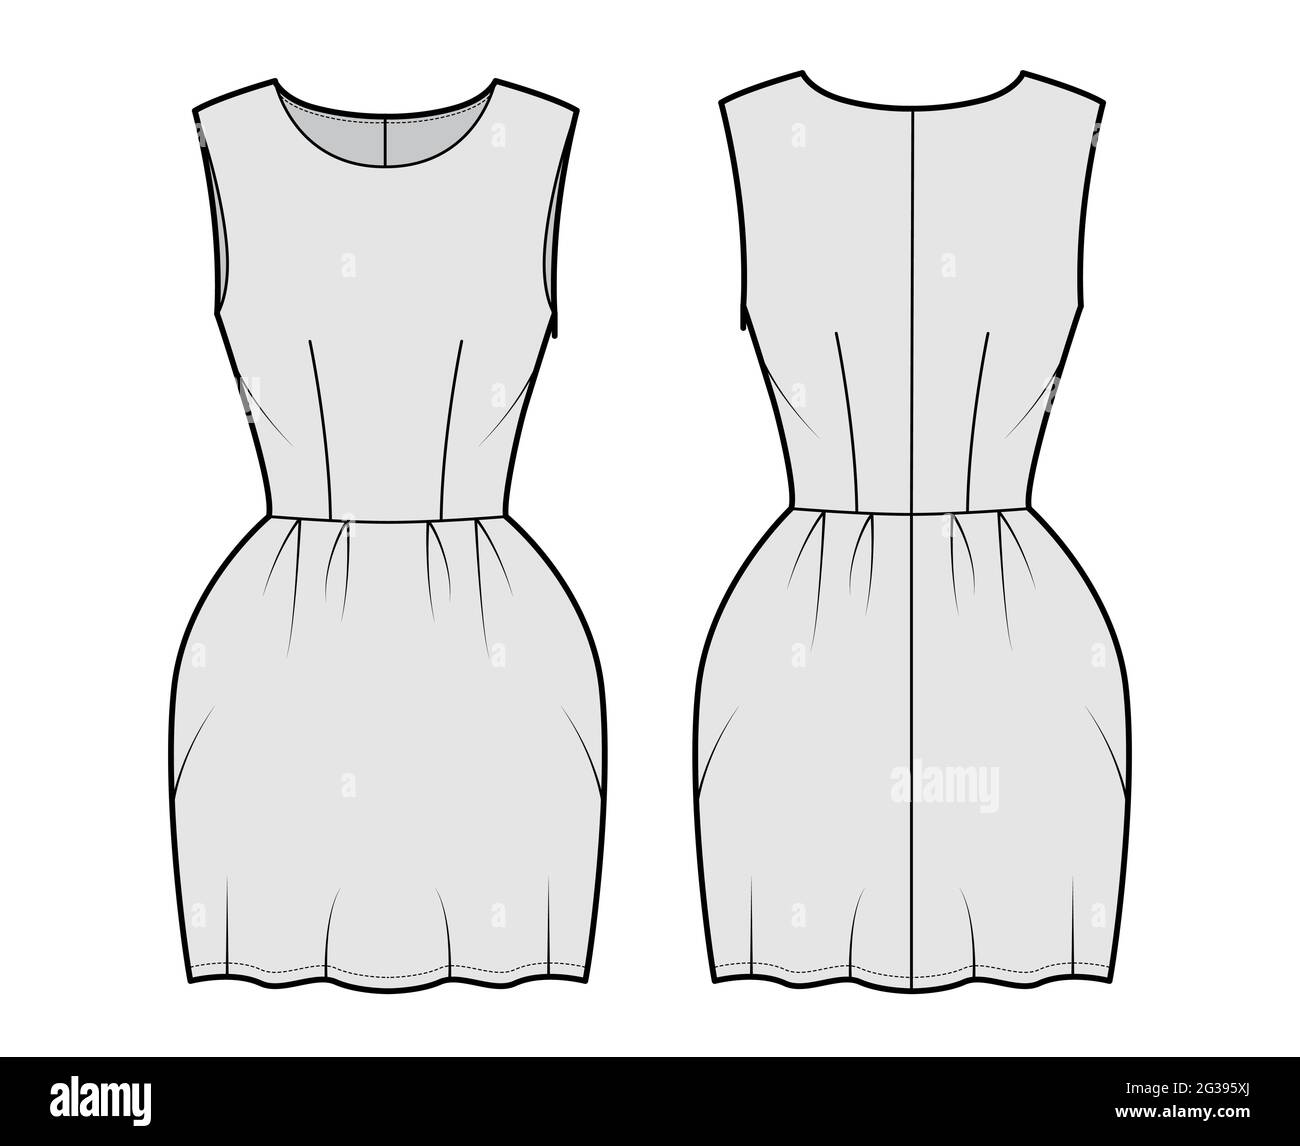 Evening dress Vectors  Illustrations for Free Download  Freepik